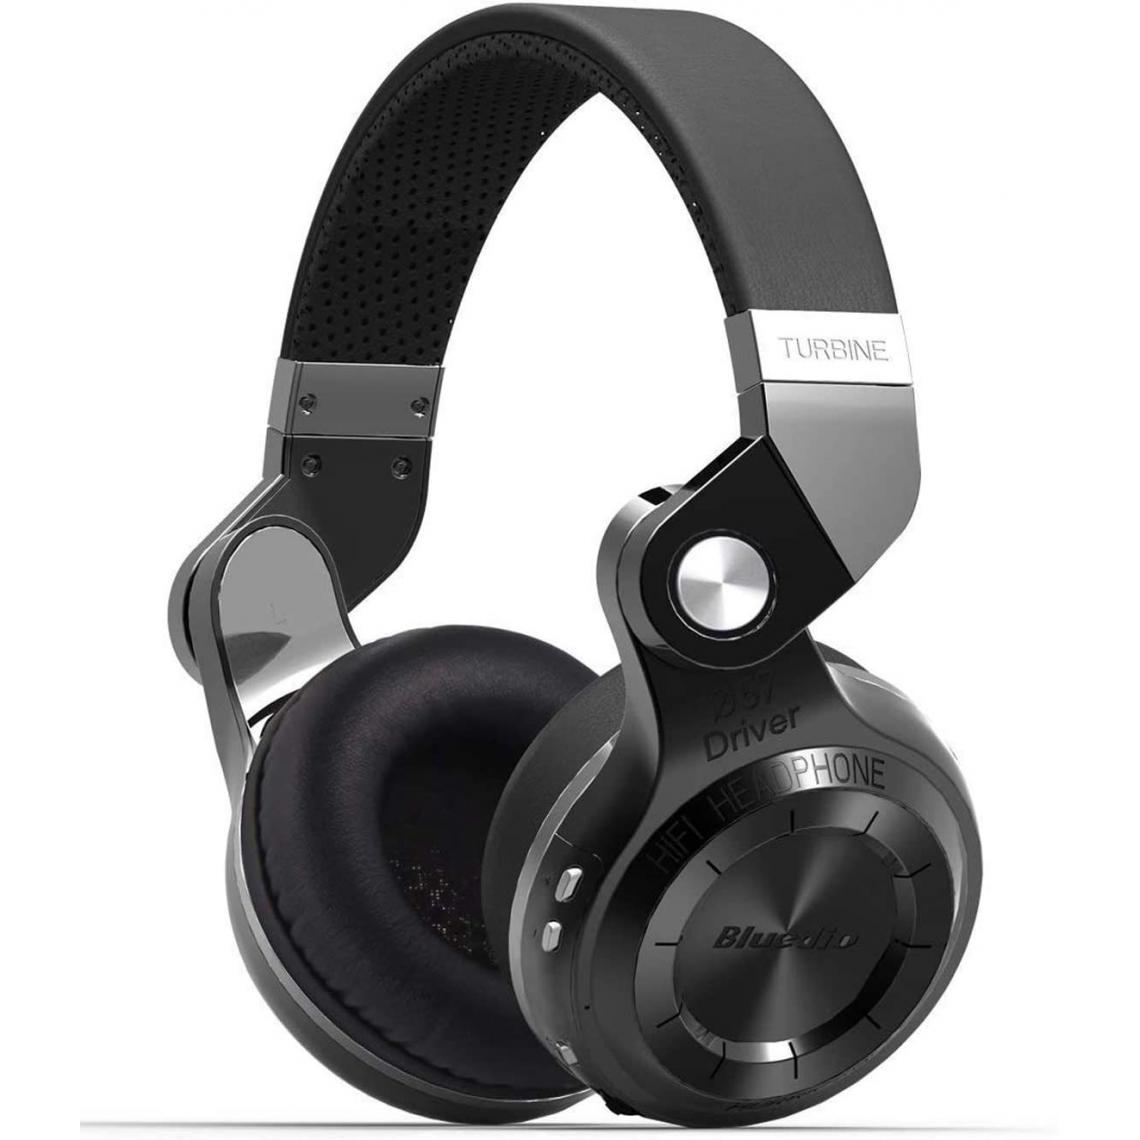 Chrono - Chronus T2S (Turbine 2 Shooting Brake) Bluetooth-Stereo-Kopfhörer kabellose Kopfhörer Bluetooth 4.1-Headset am Ohr Kopfhörer Geschenkpaketï¼noirï¼ - Casques de réalité virtuelle